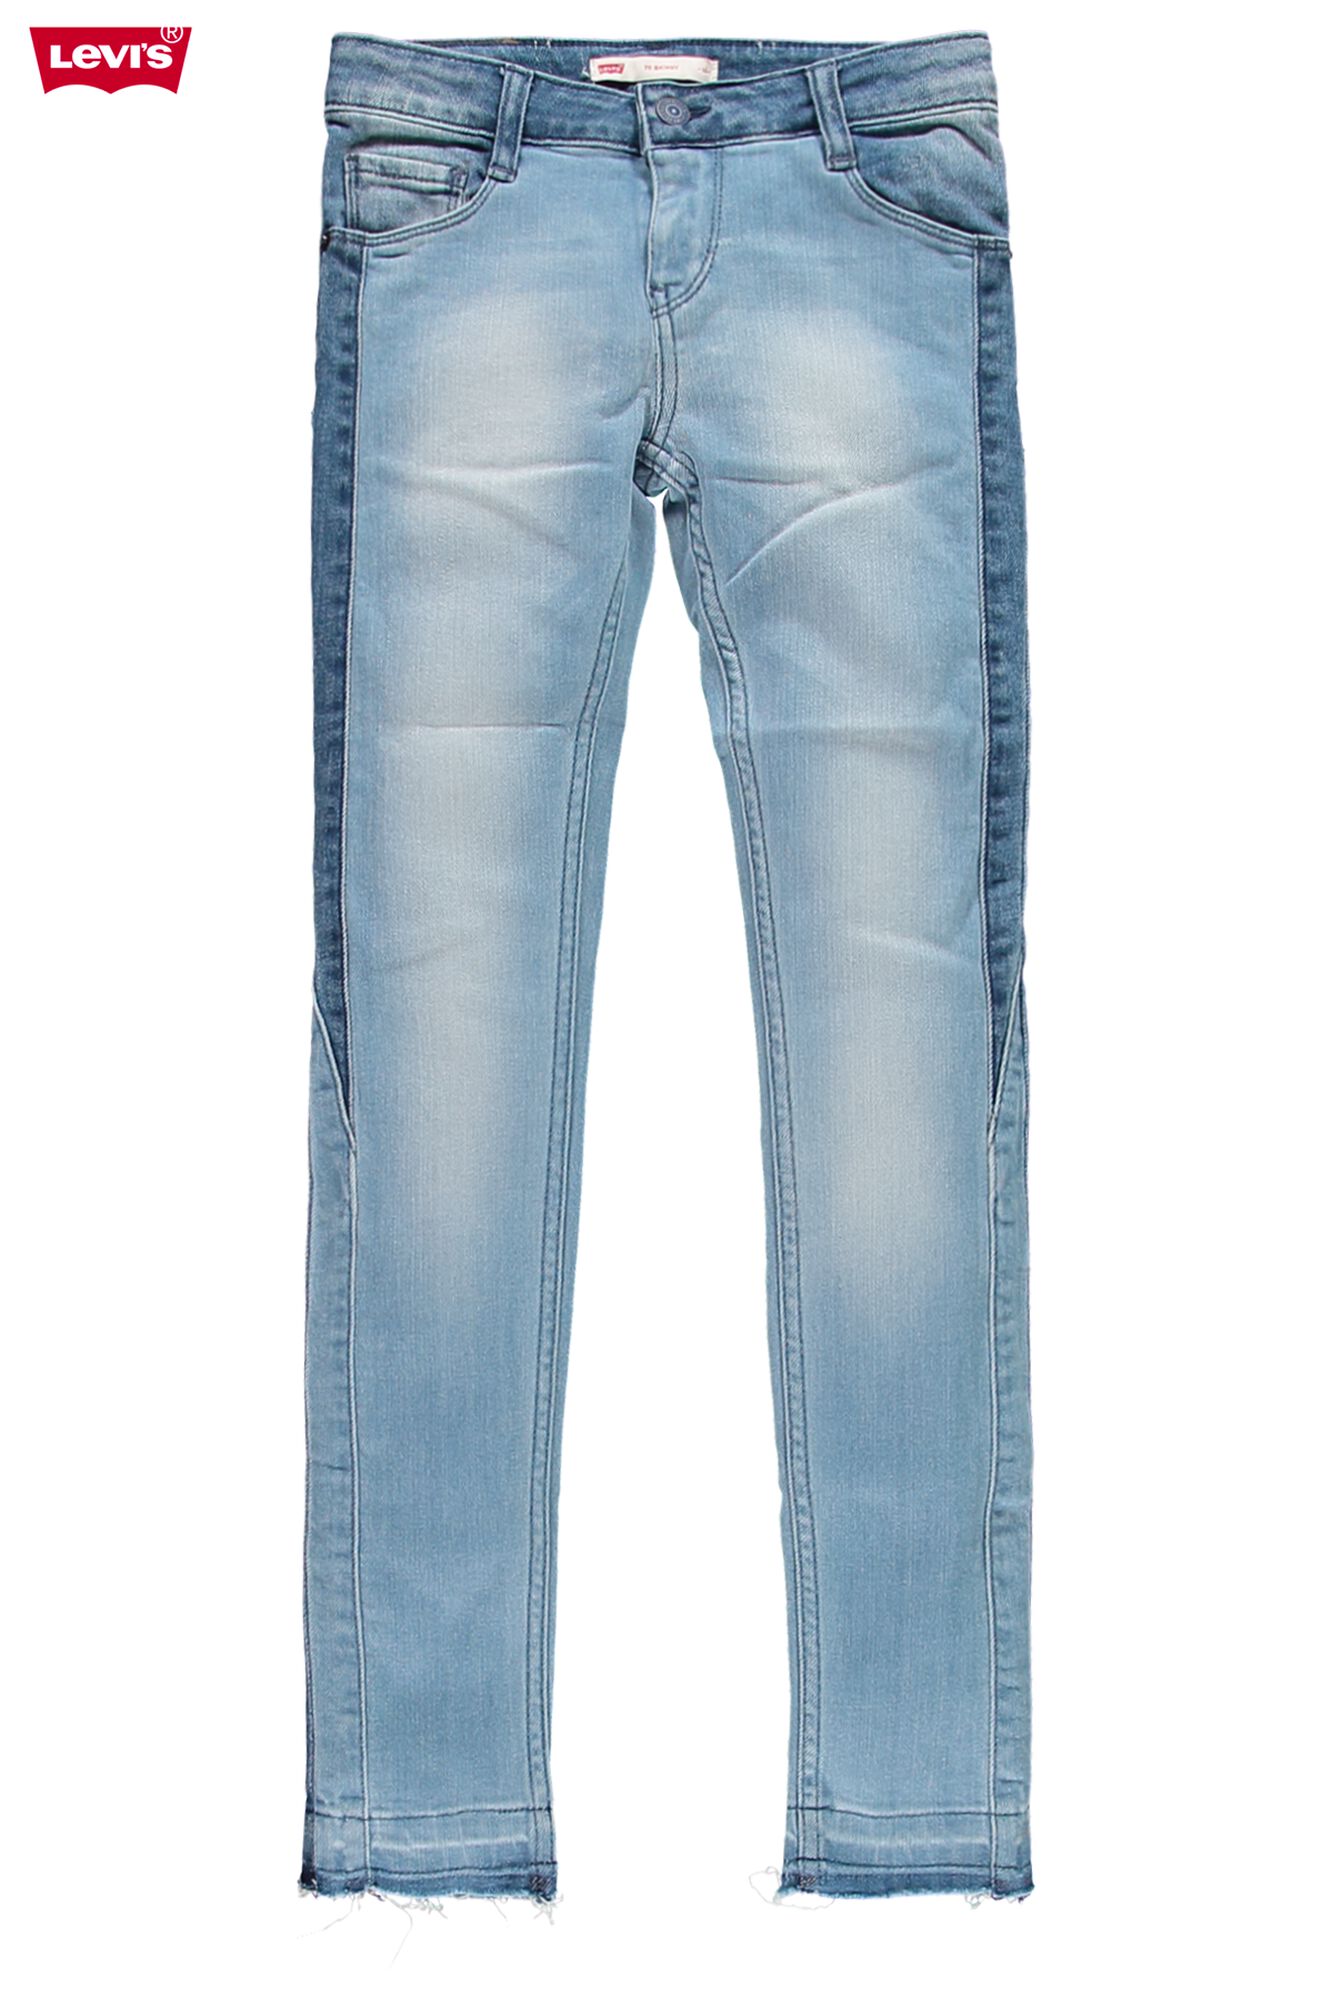 Girls Jeans Levi's 711 Skinny Blue Buy Online